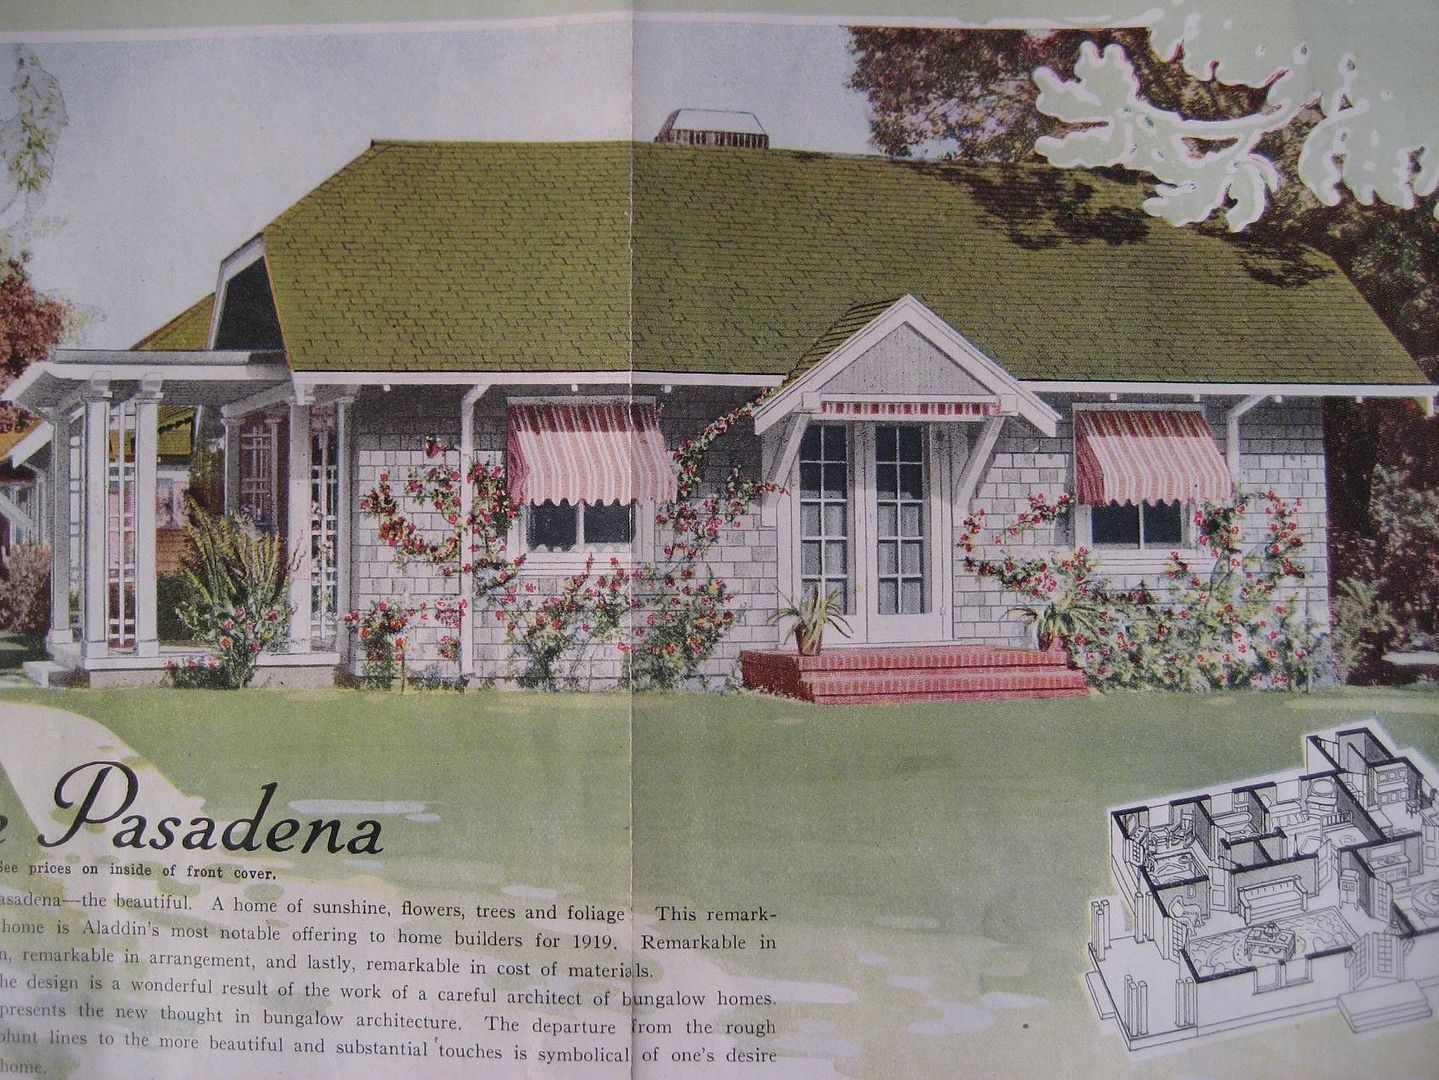 The Aladdin Pasadena was a very popular house